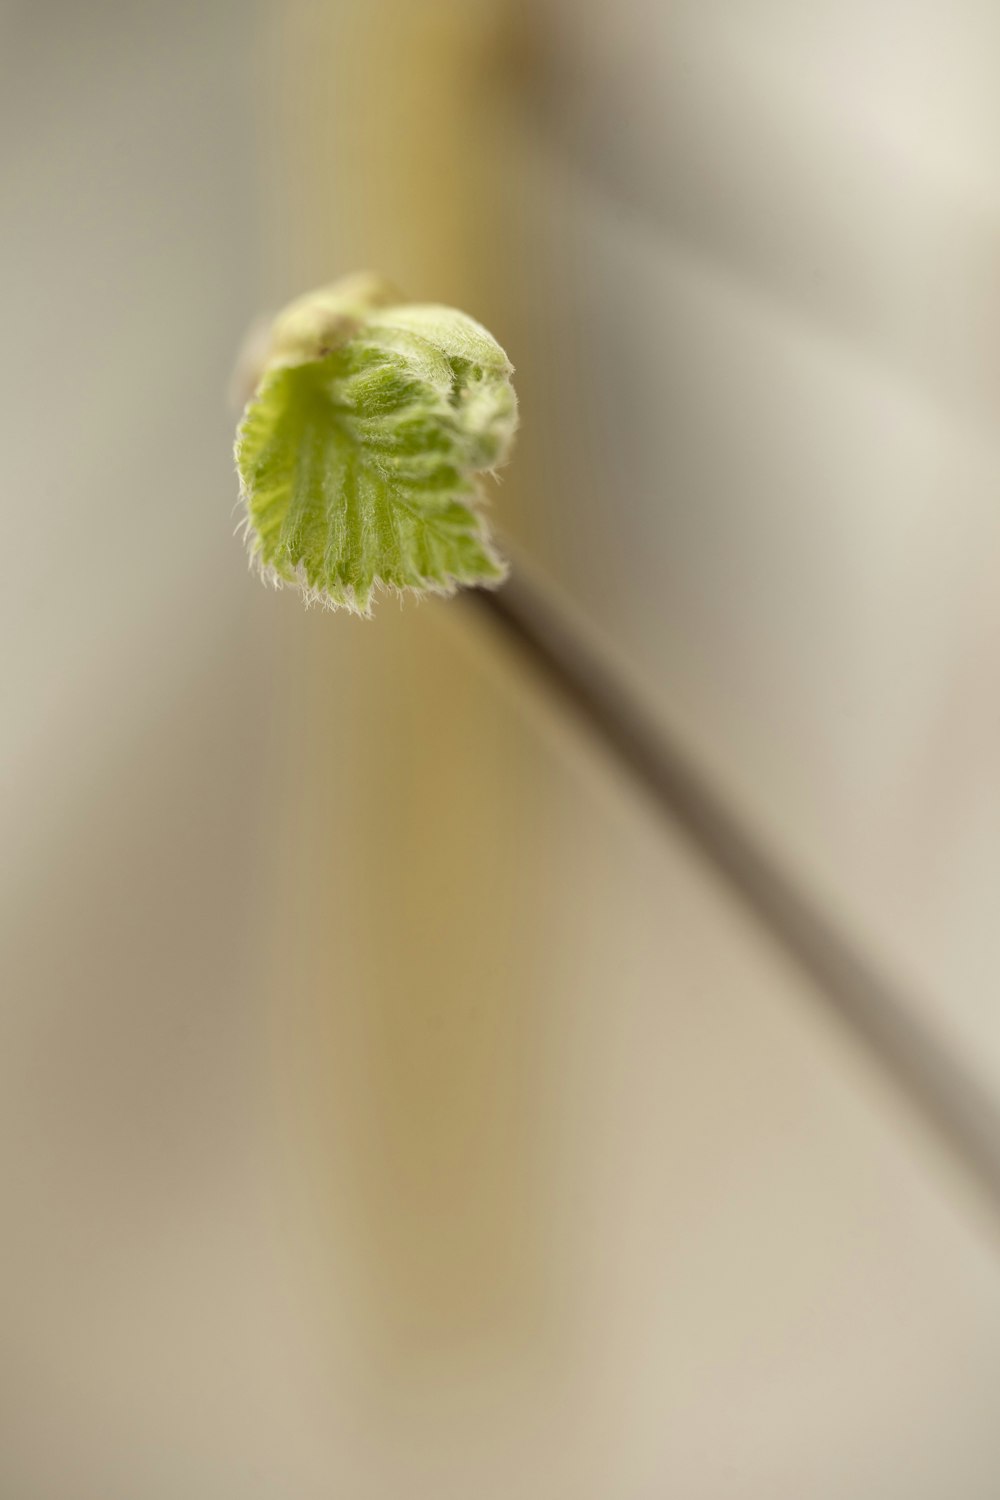 a close up of a green leaf on a stem